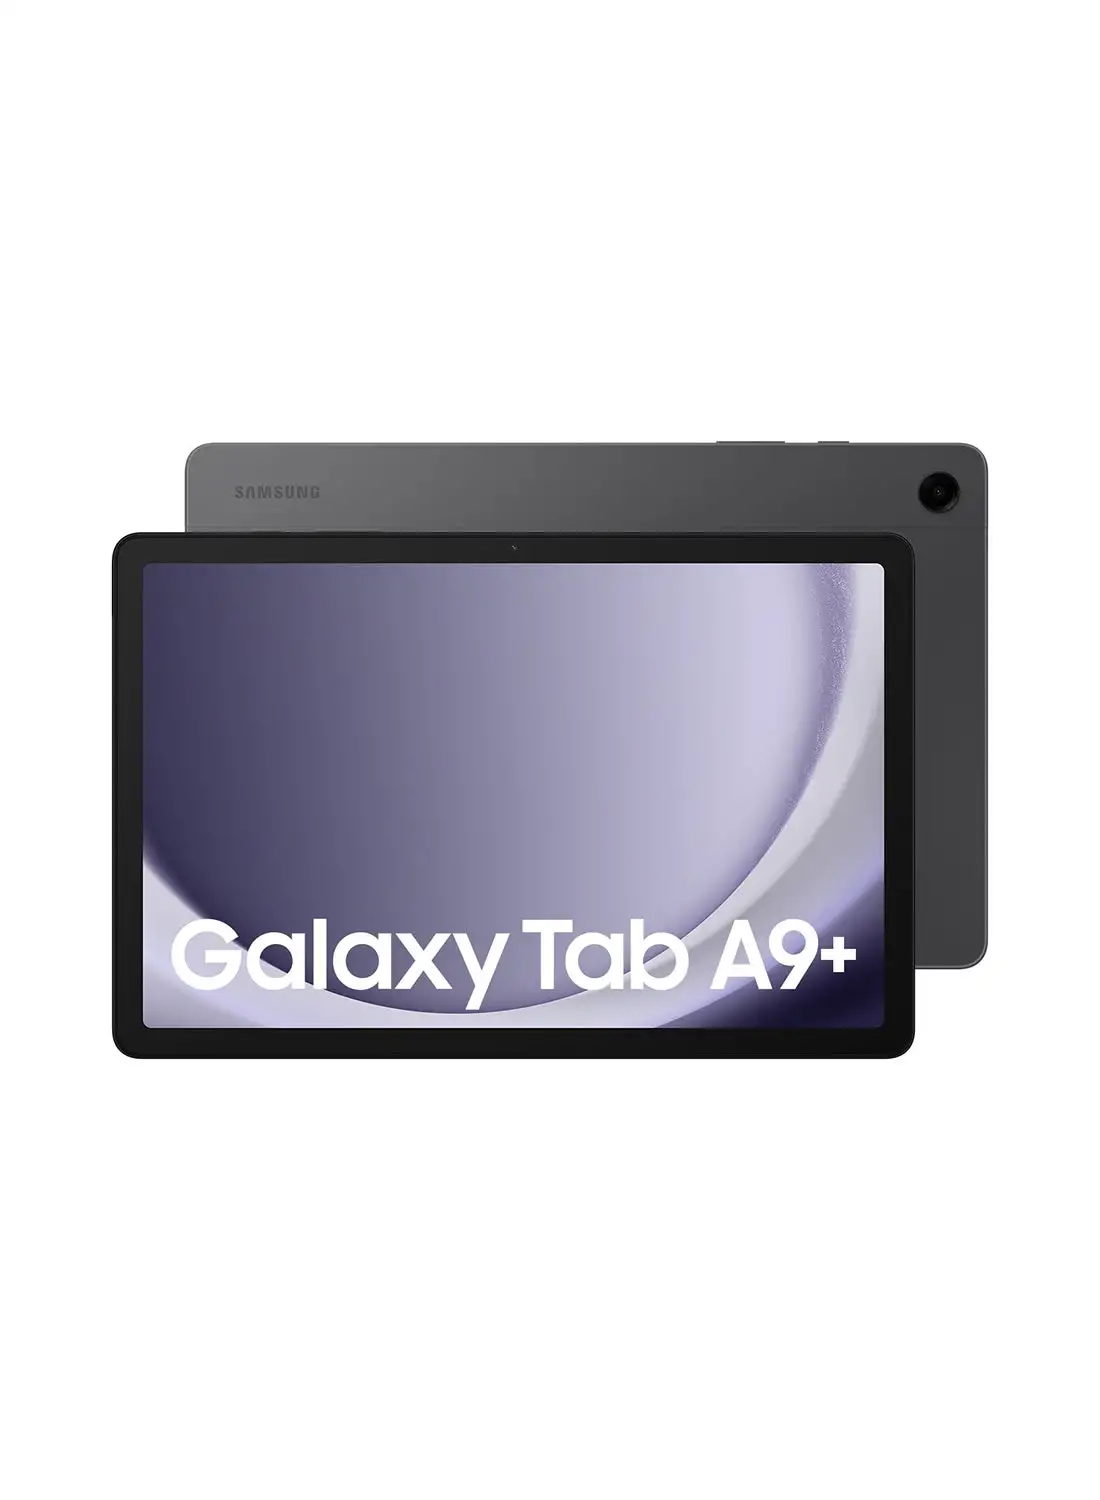 Samsung Galaxy Tab A9 Plus Graphite 8GB RAM 128GB Wifi - Middle East Version